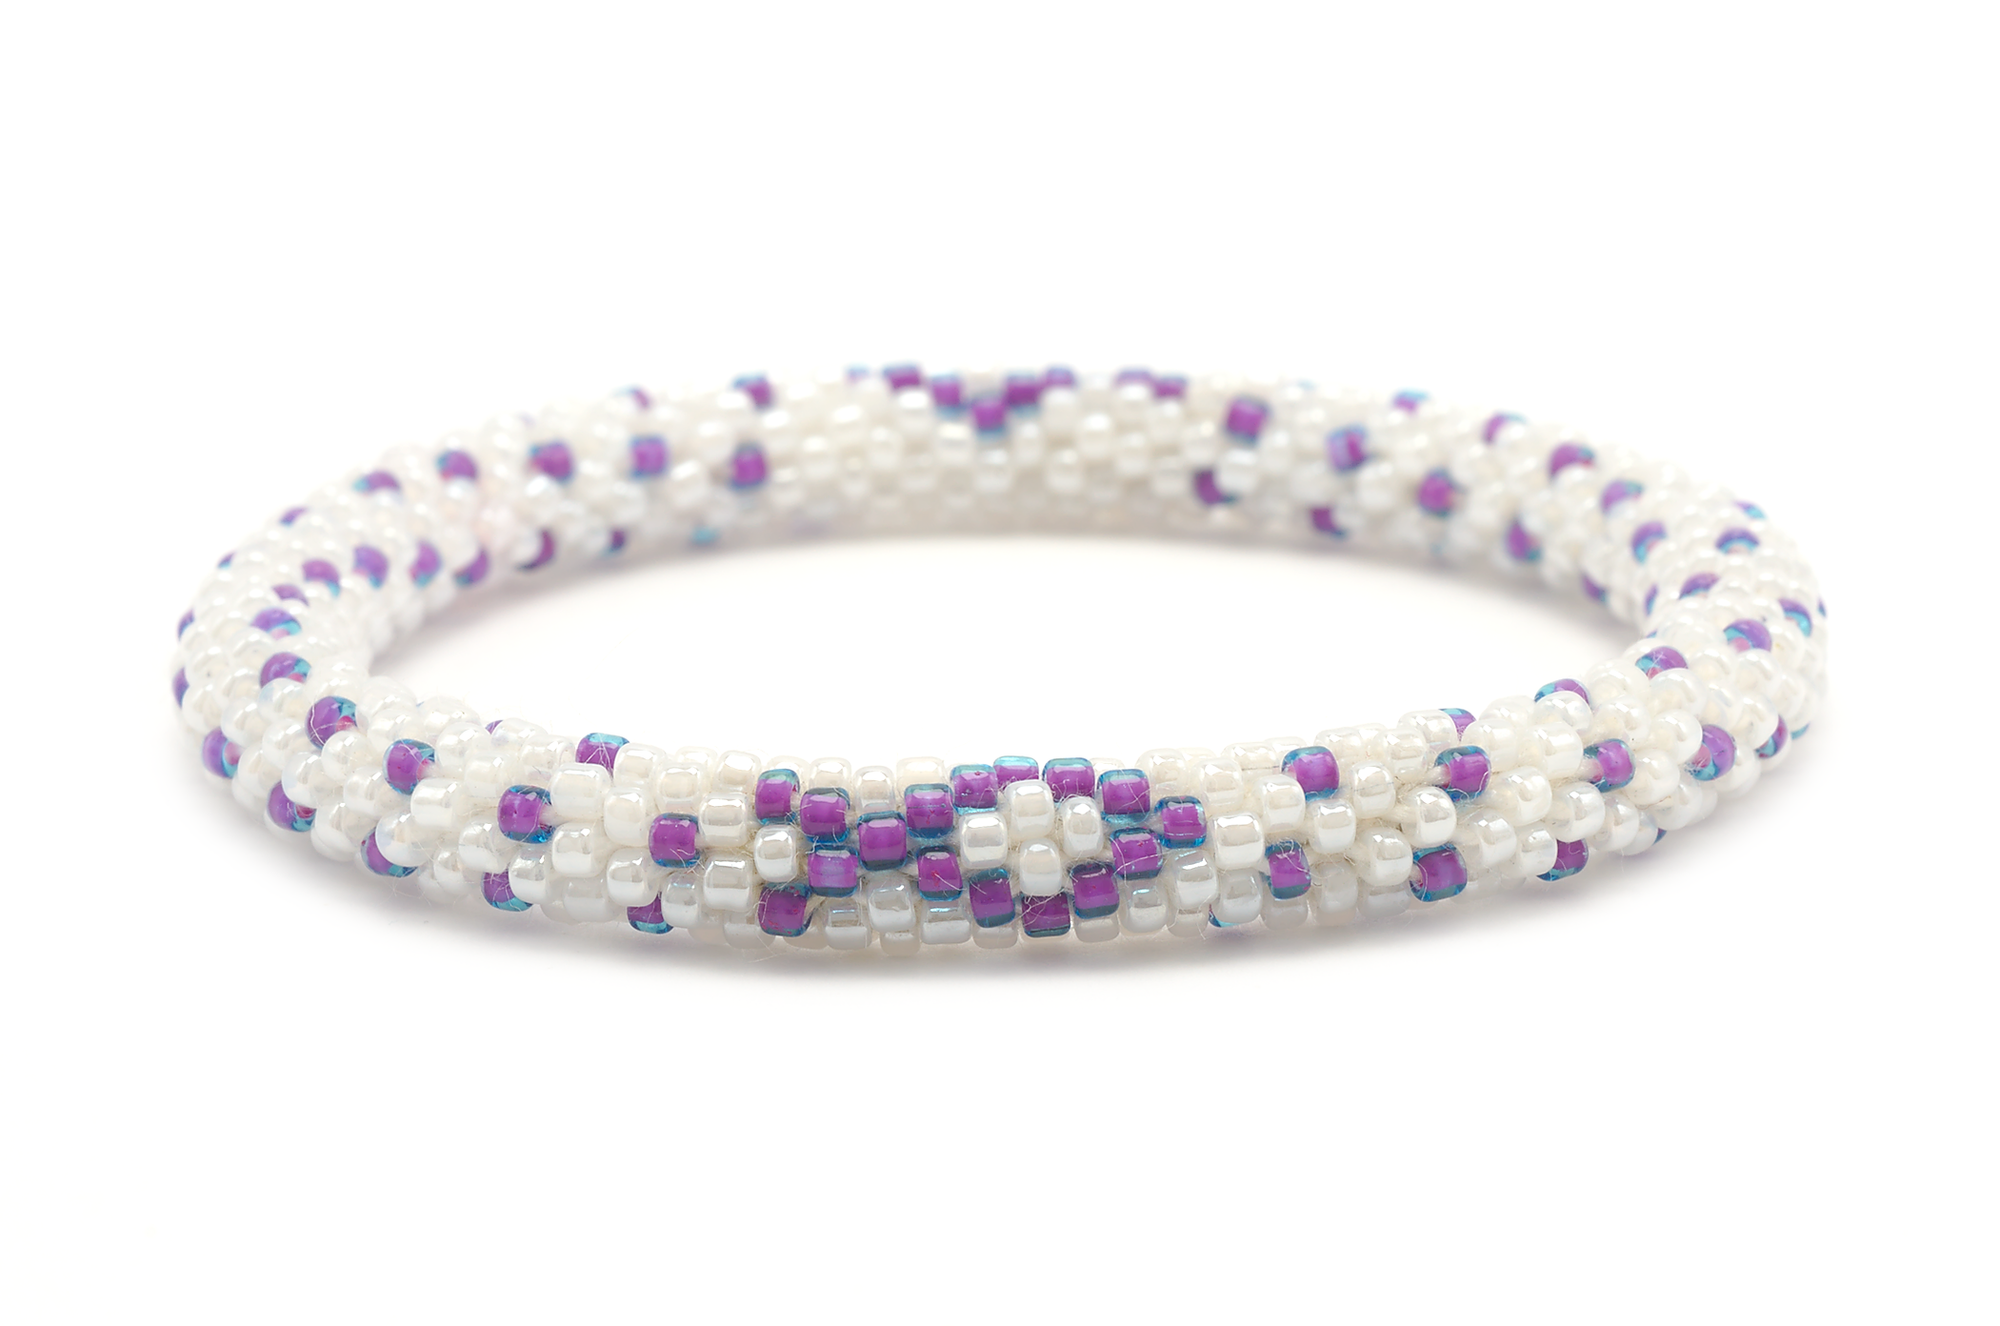 Sashka Co. Cause Bracelet White/Purple Cancer Awareness Bracelet